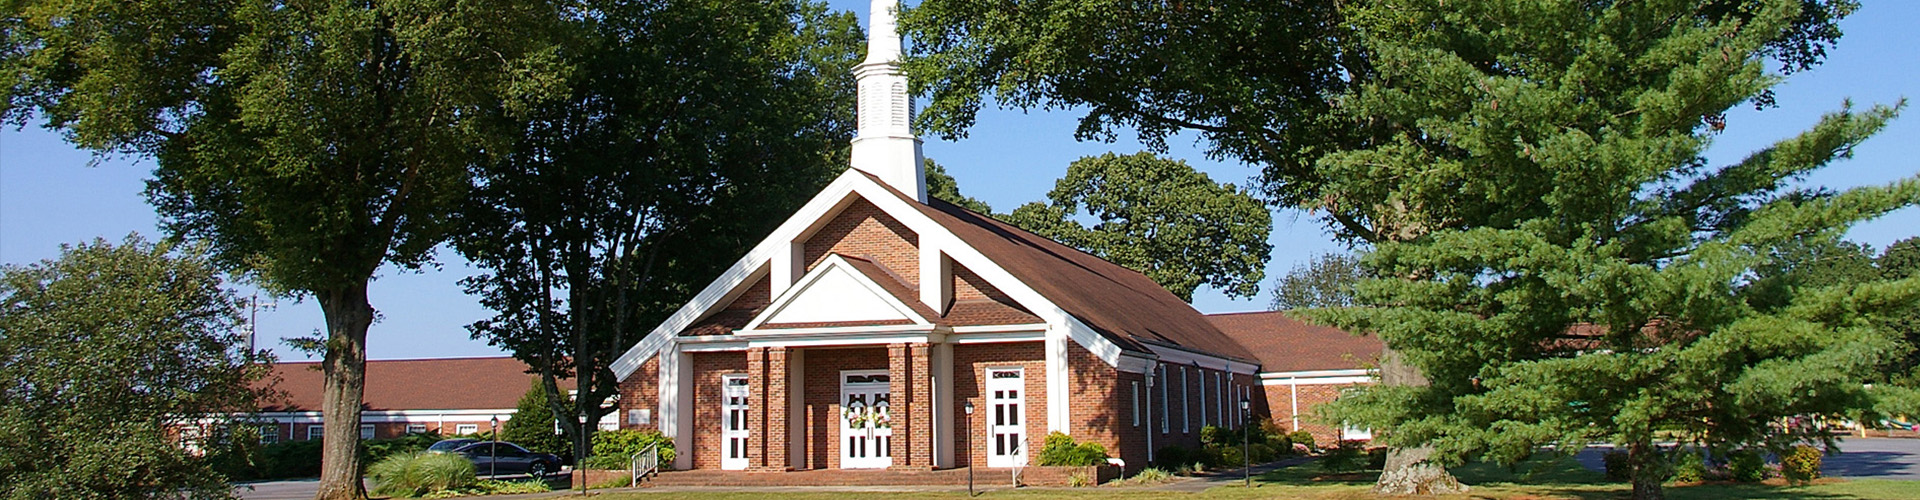 gilwood-church-concord